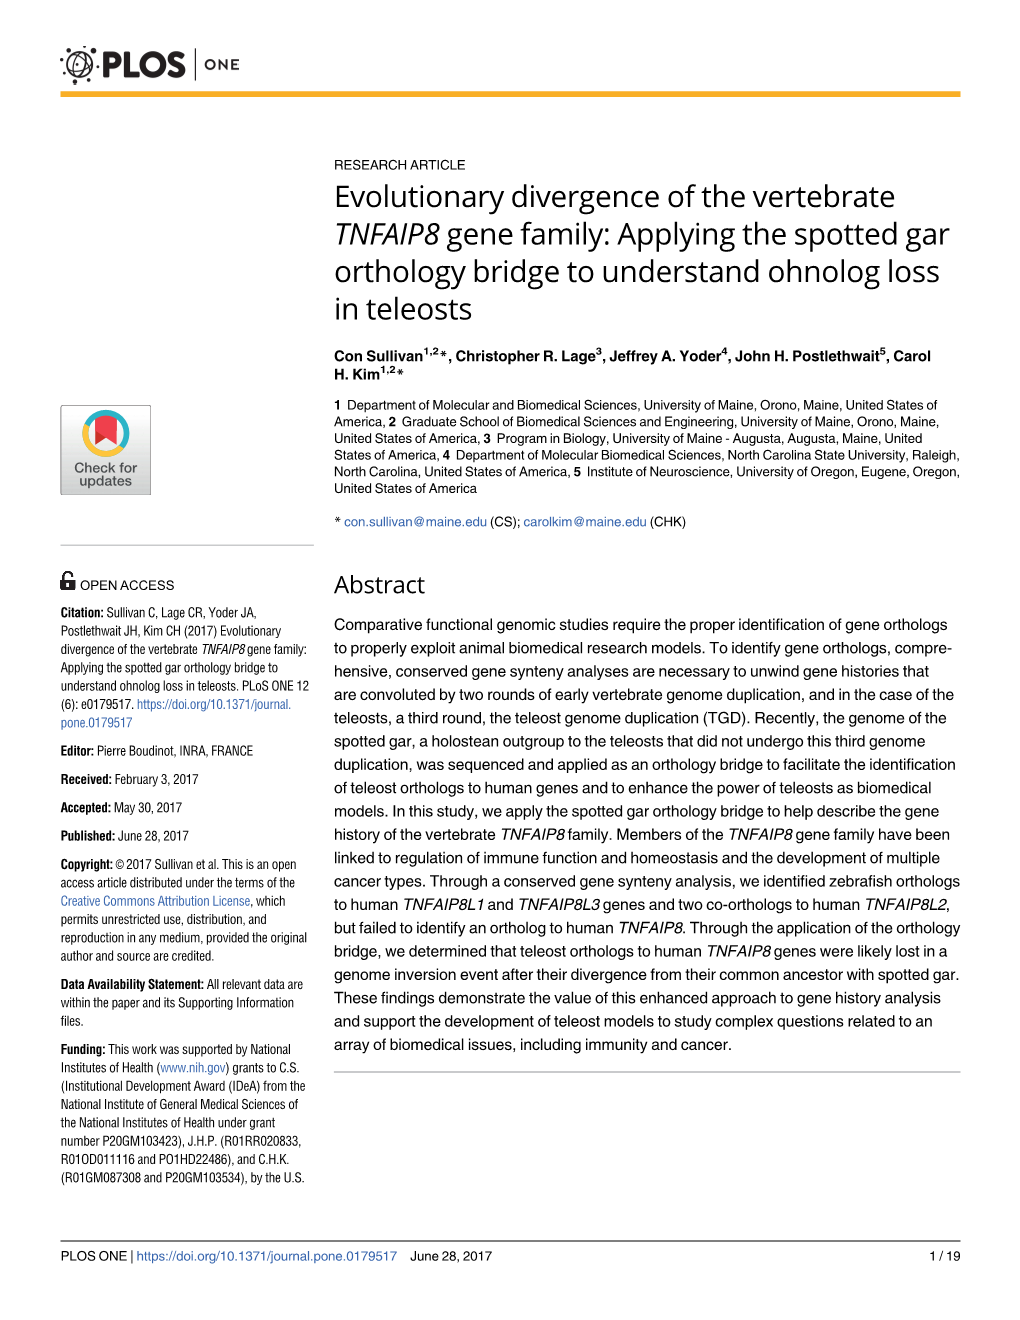 Evolutionary Divergence of the Vertebrate TNFAIP8 Gene Family: Applying the Spotted Gar Orthology Bridge to Understand Ohnolog Loss in Teleosts